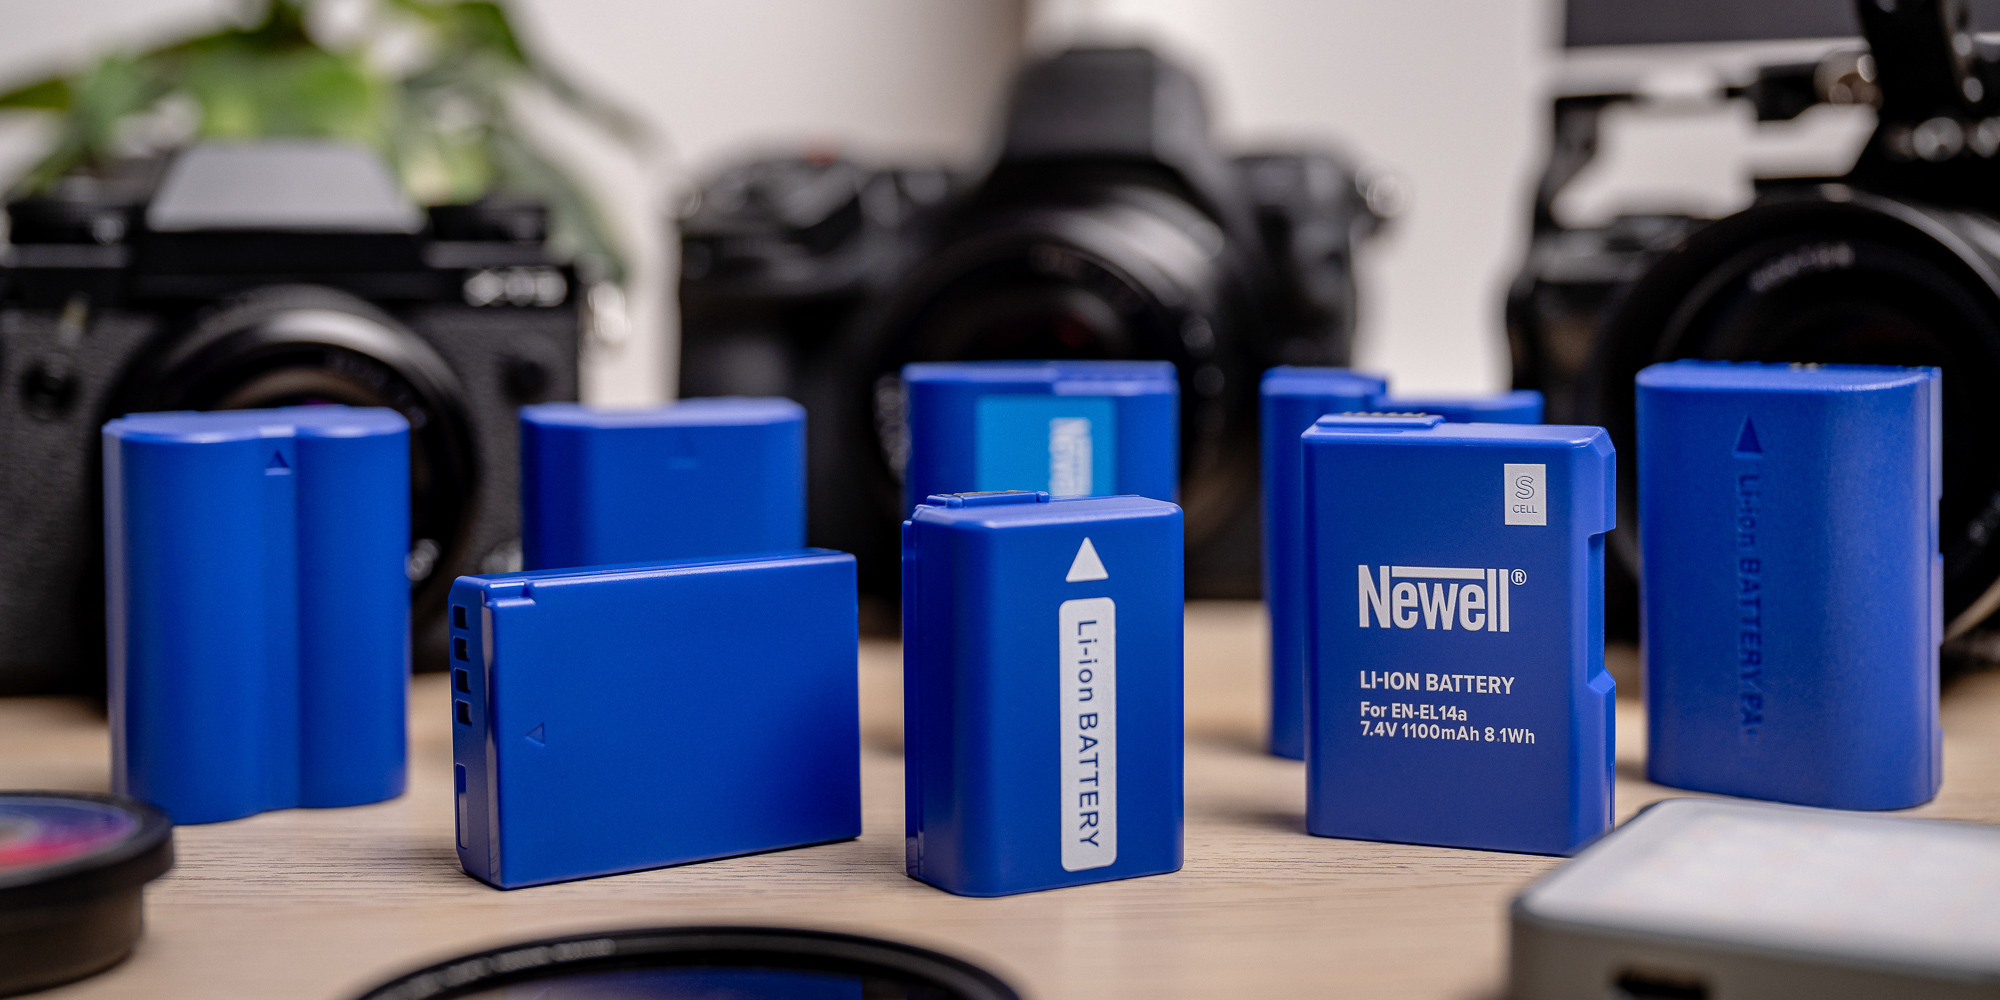 Akumulator Newell SupraCell Protect zamiennik NP-FW50 do Sony